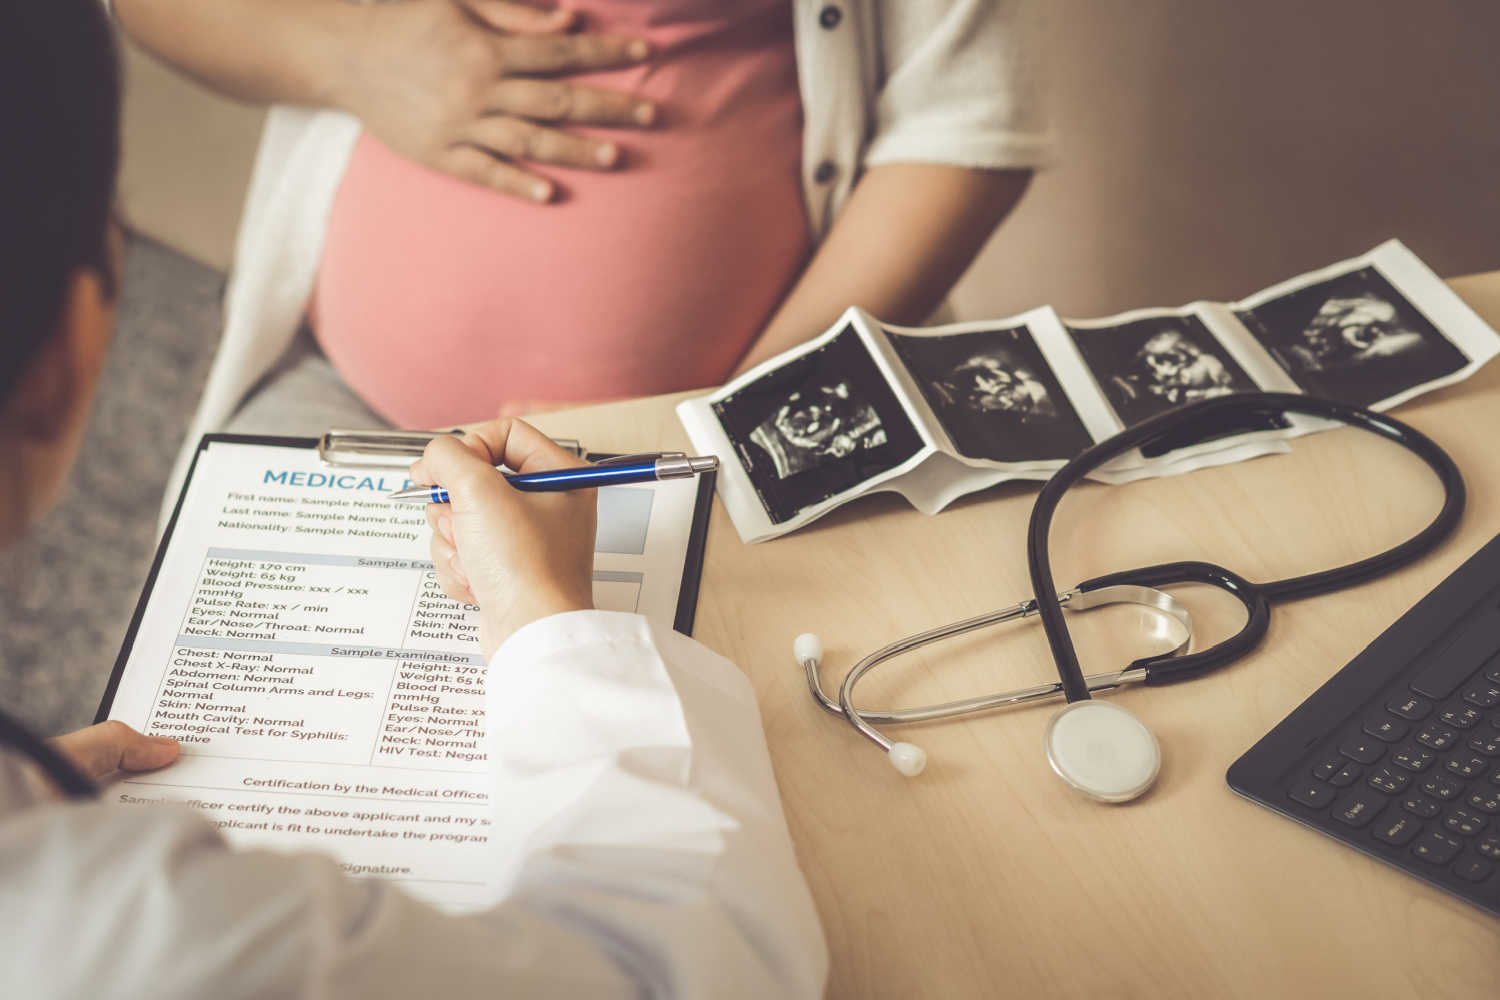 Prenatal visits schedule - a brief